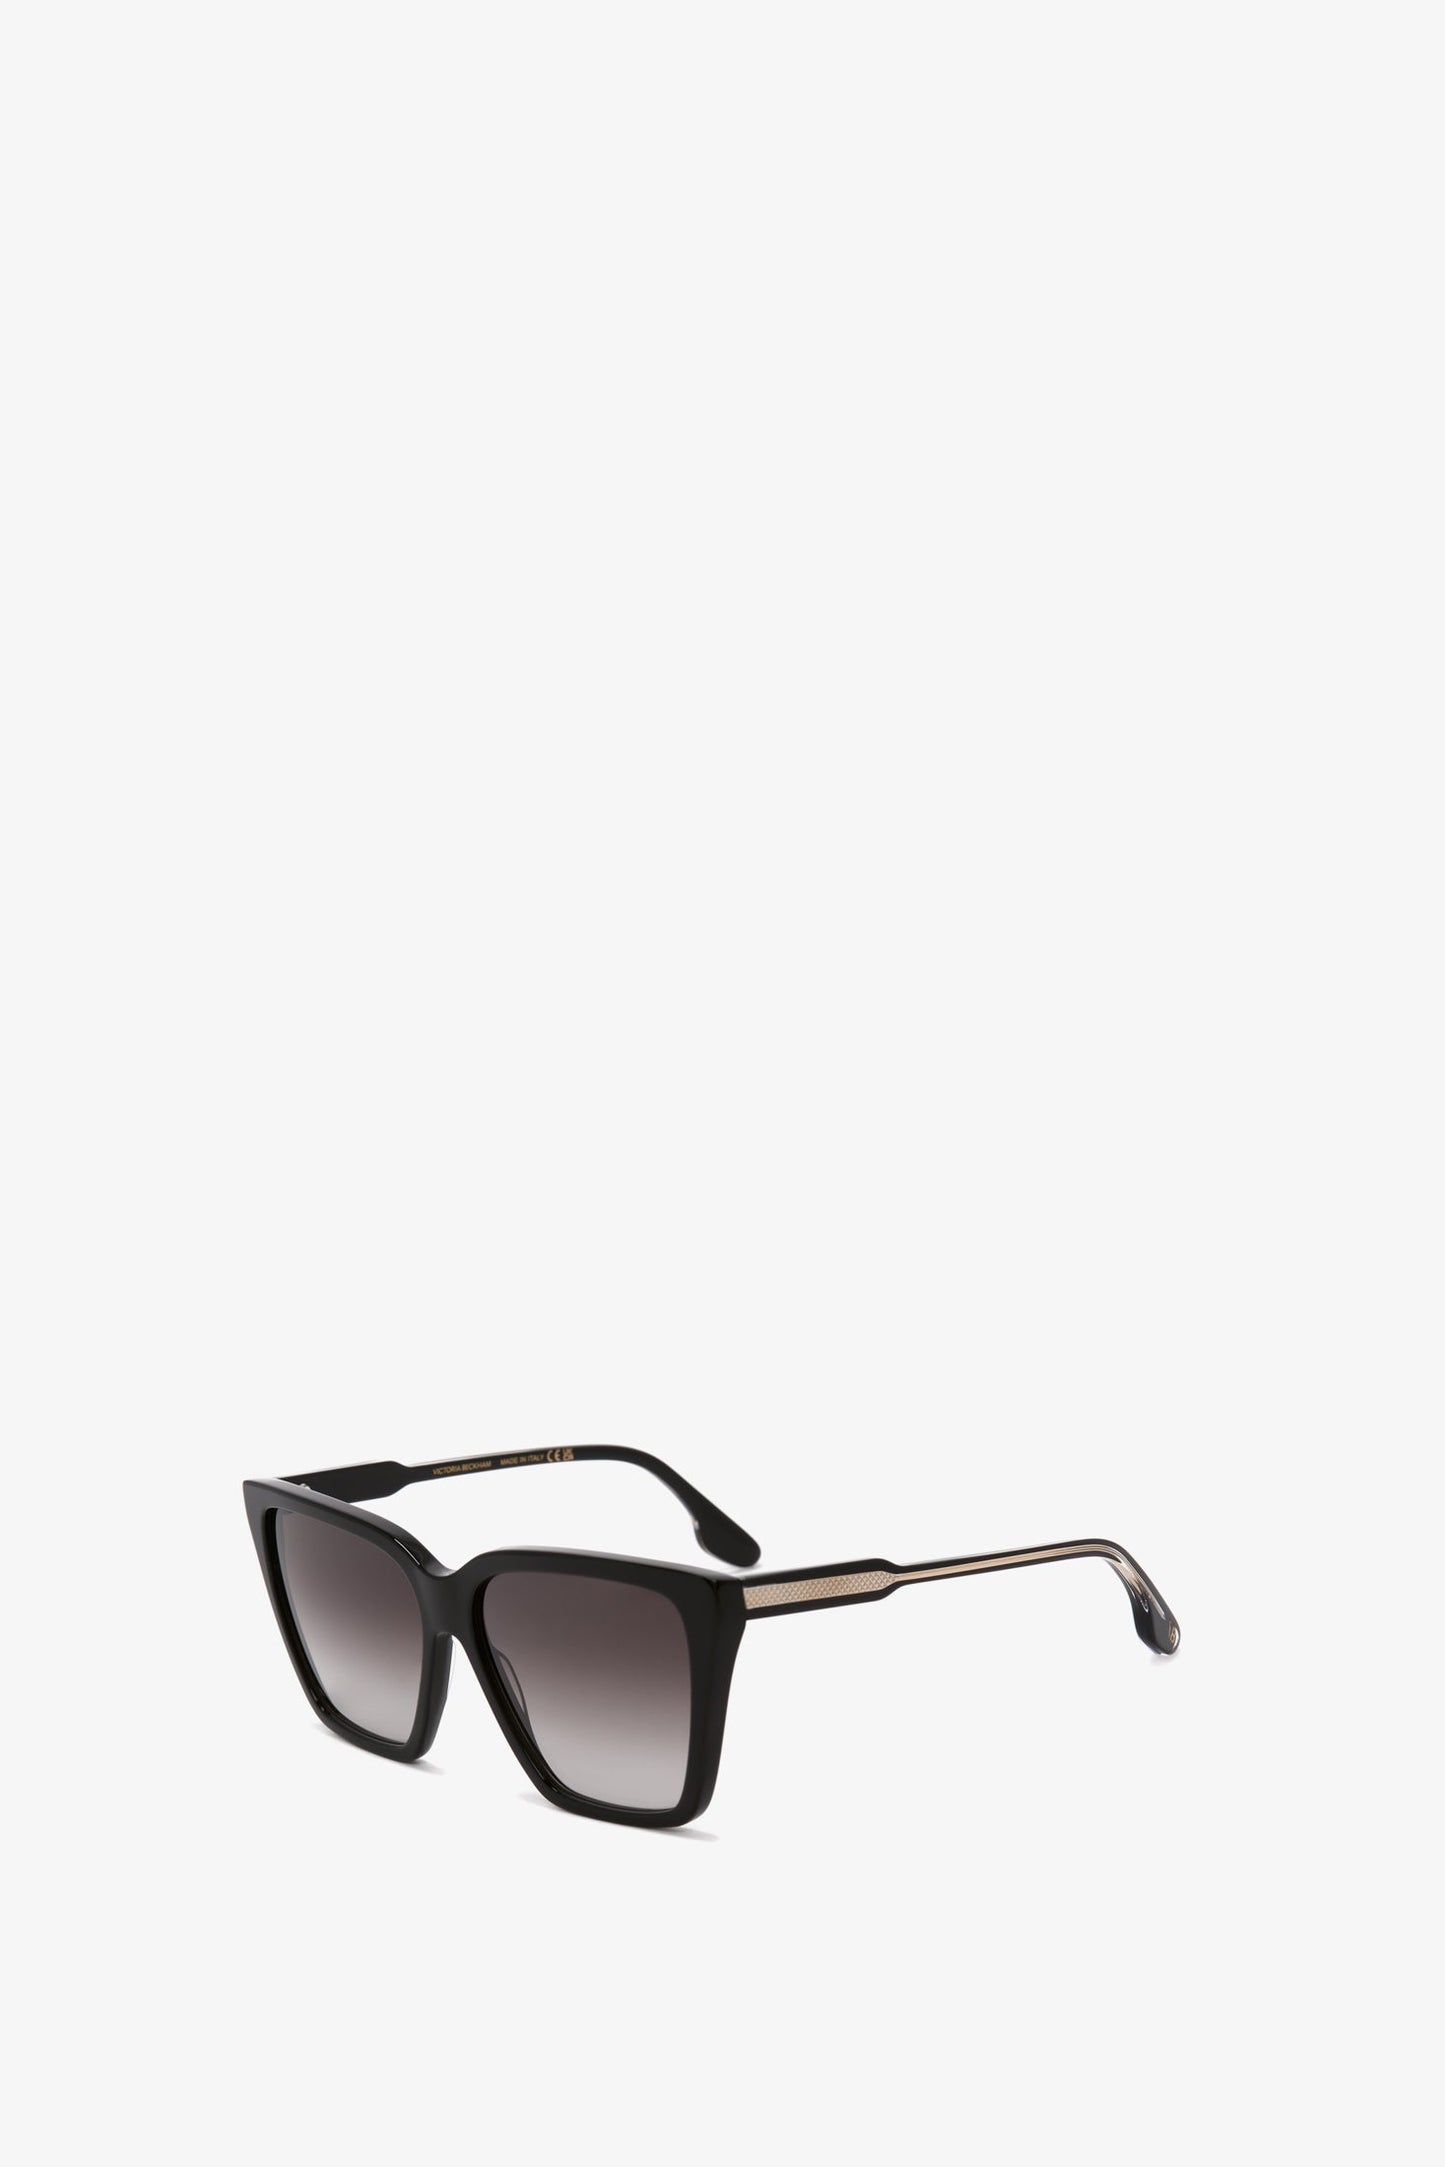 Soft Square Frame Sunglasses In Black-Gold